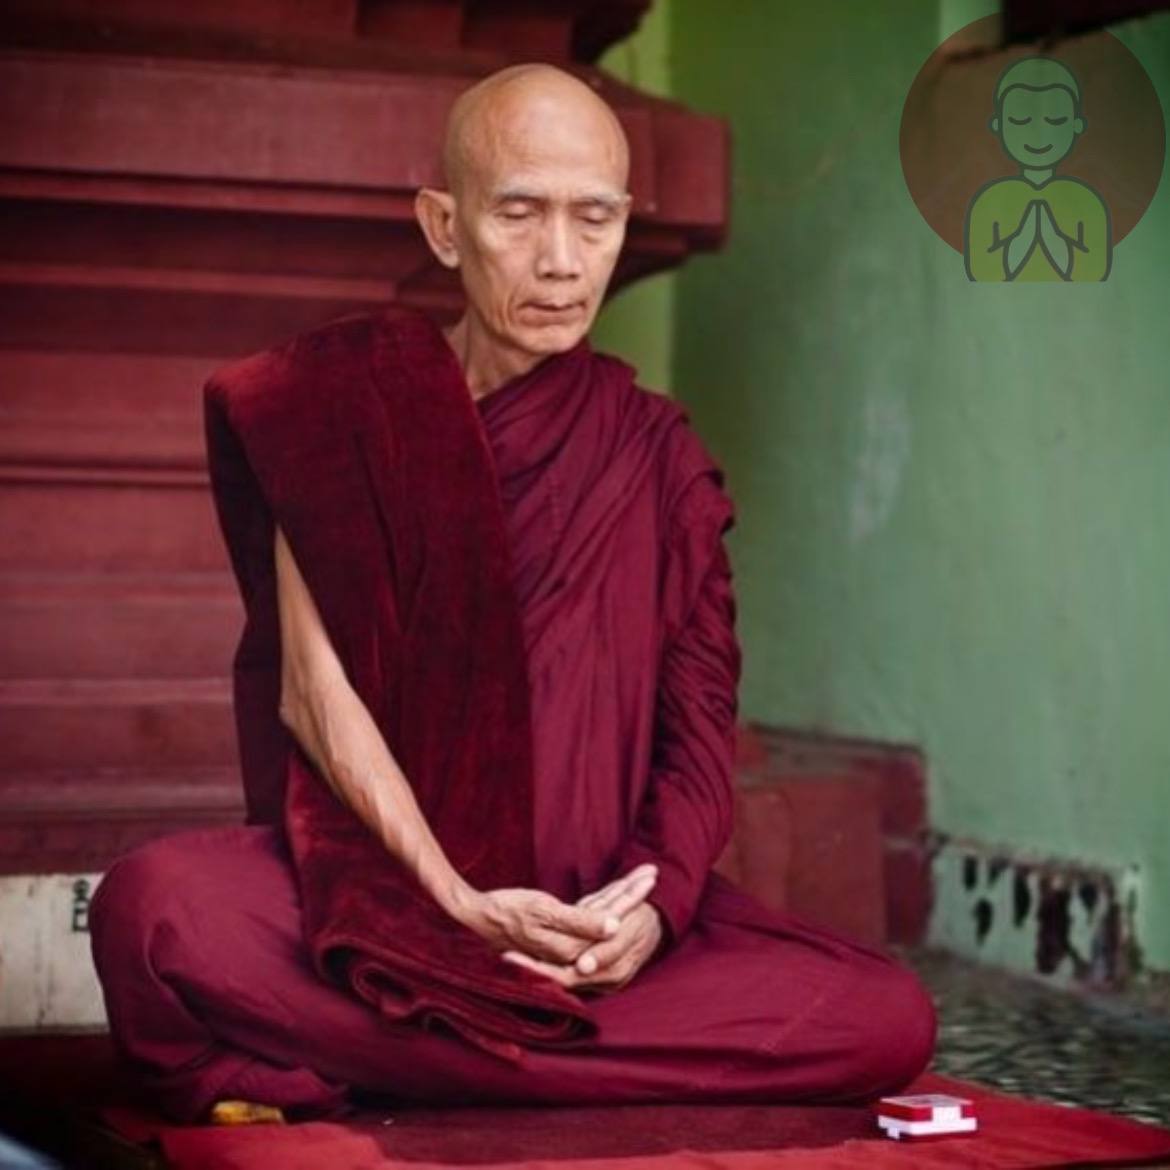 Слушать тибетскую медитацию. Буддистский монах Тибет. Самомумификация тибетских монахов. Тибетский монах в медитации. Буддийский монах медитация.